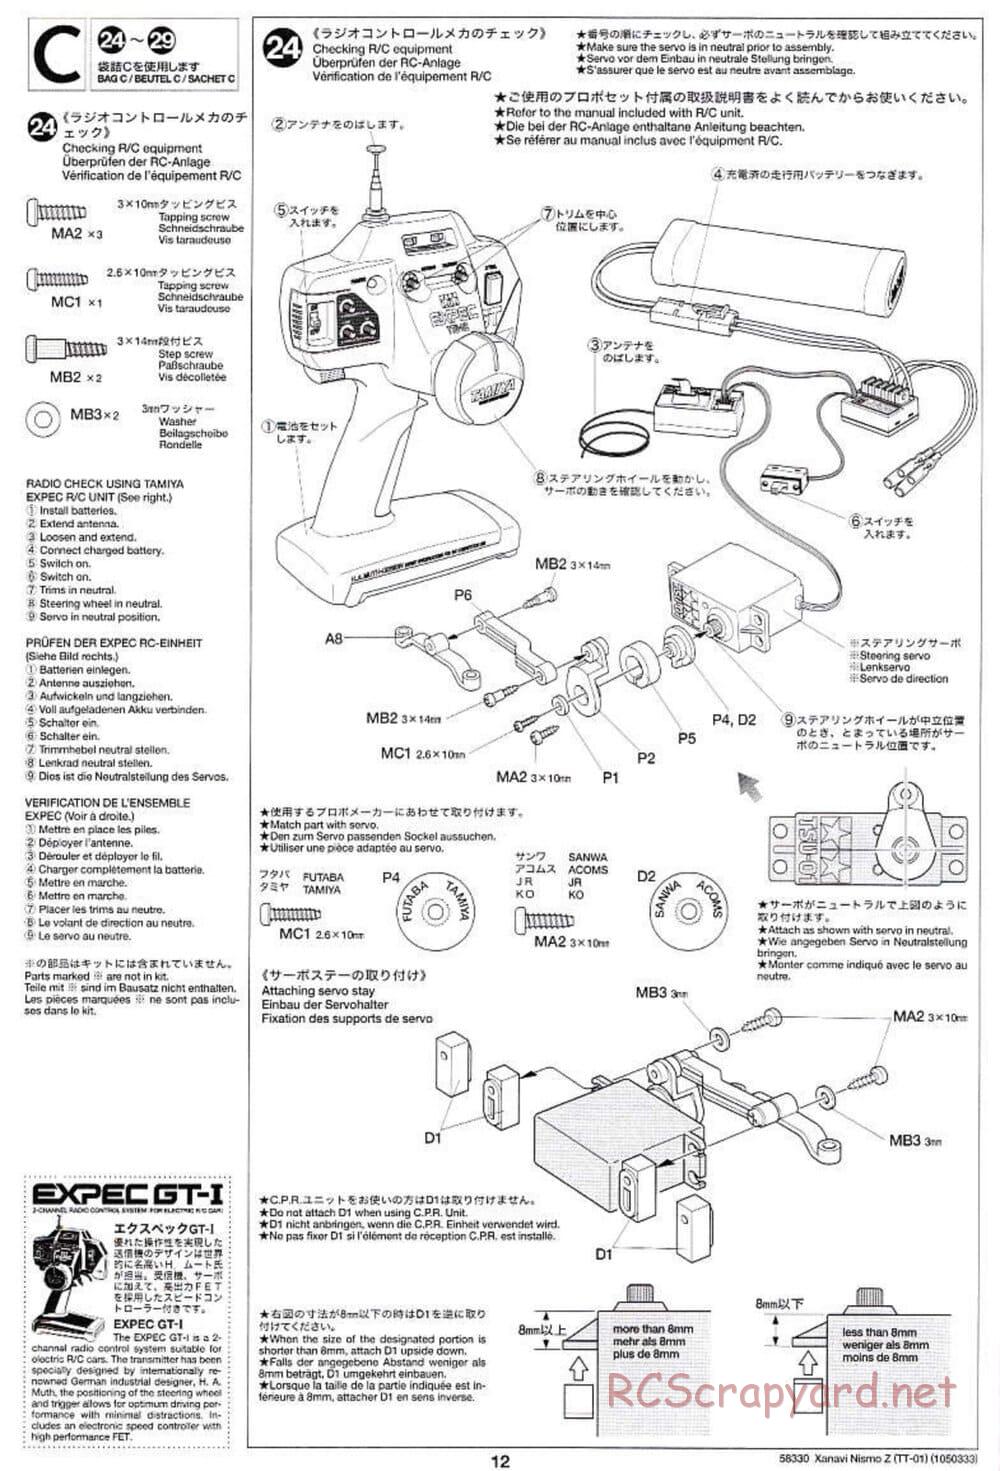 Tamiya - Xanavi Nismo Z - TT-01 Chassis - Manual - Page 12